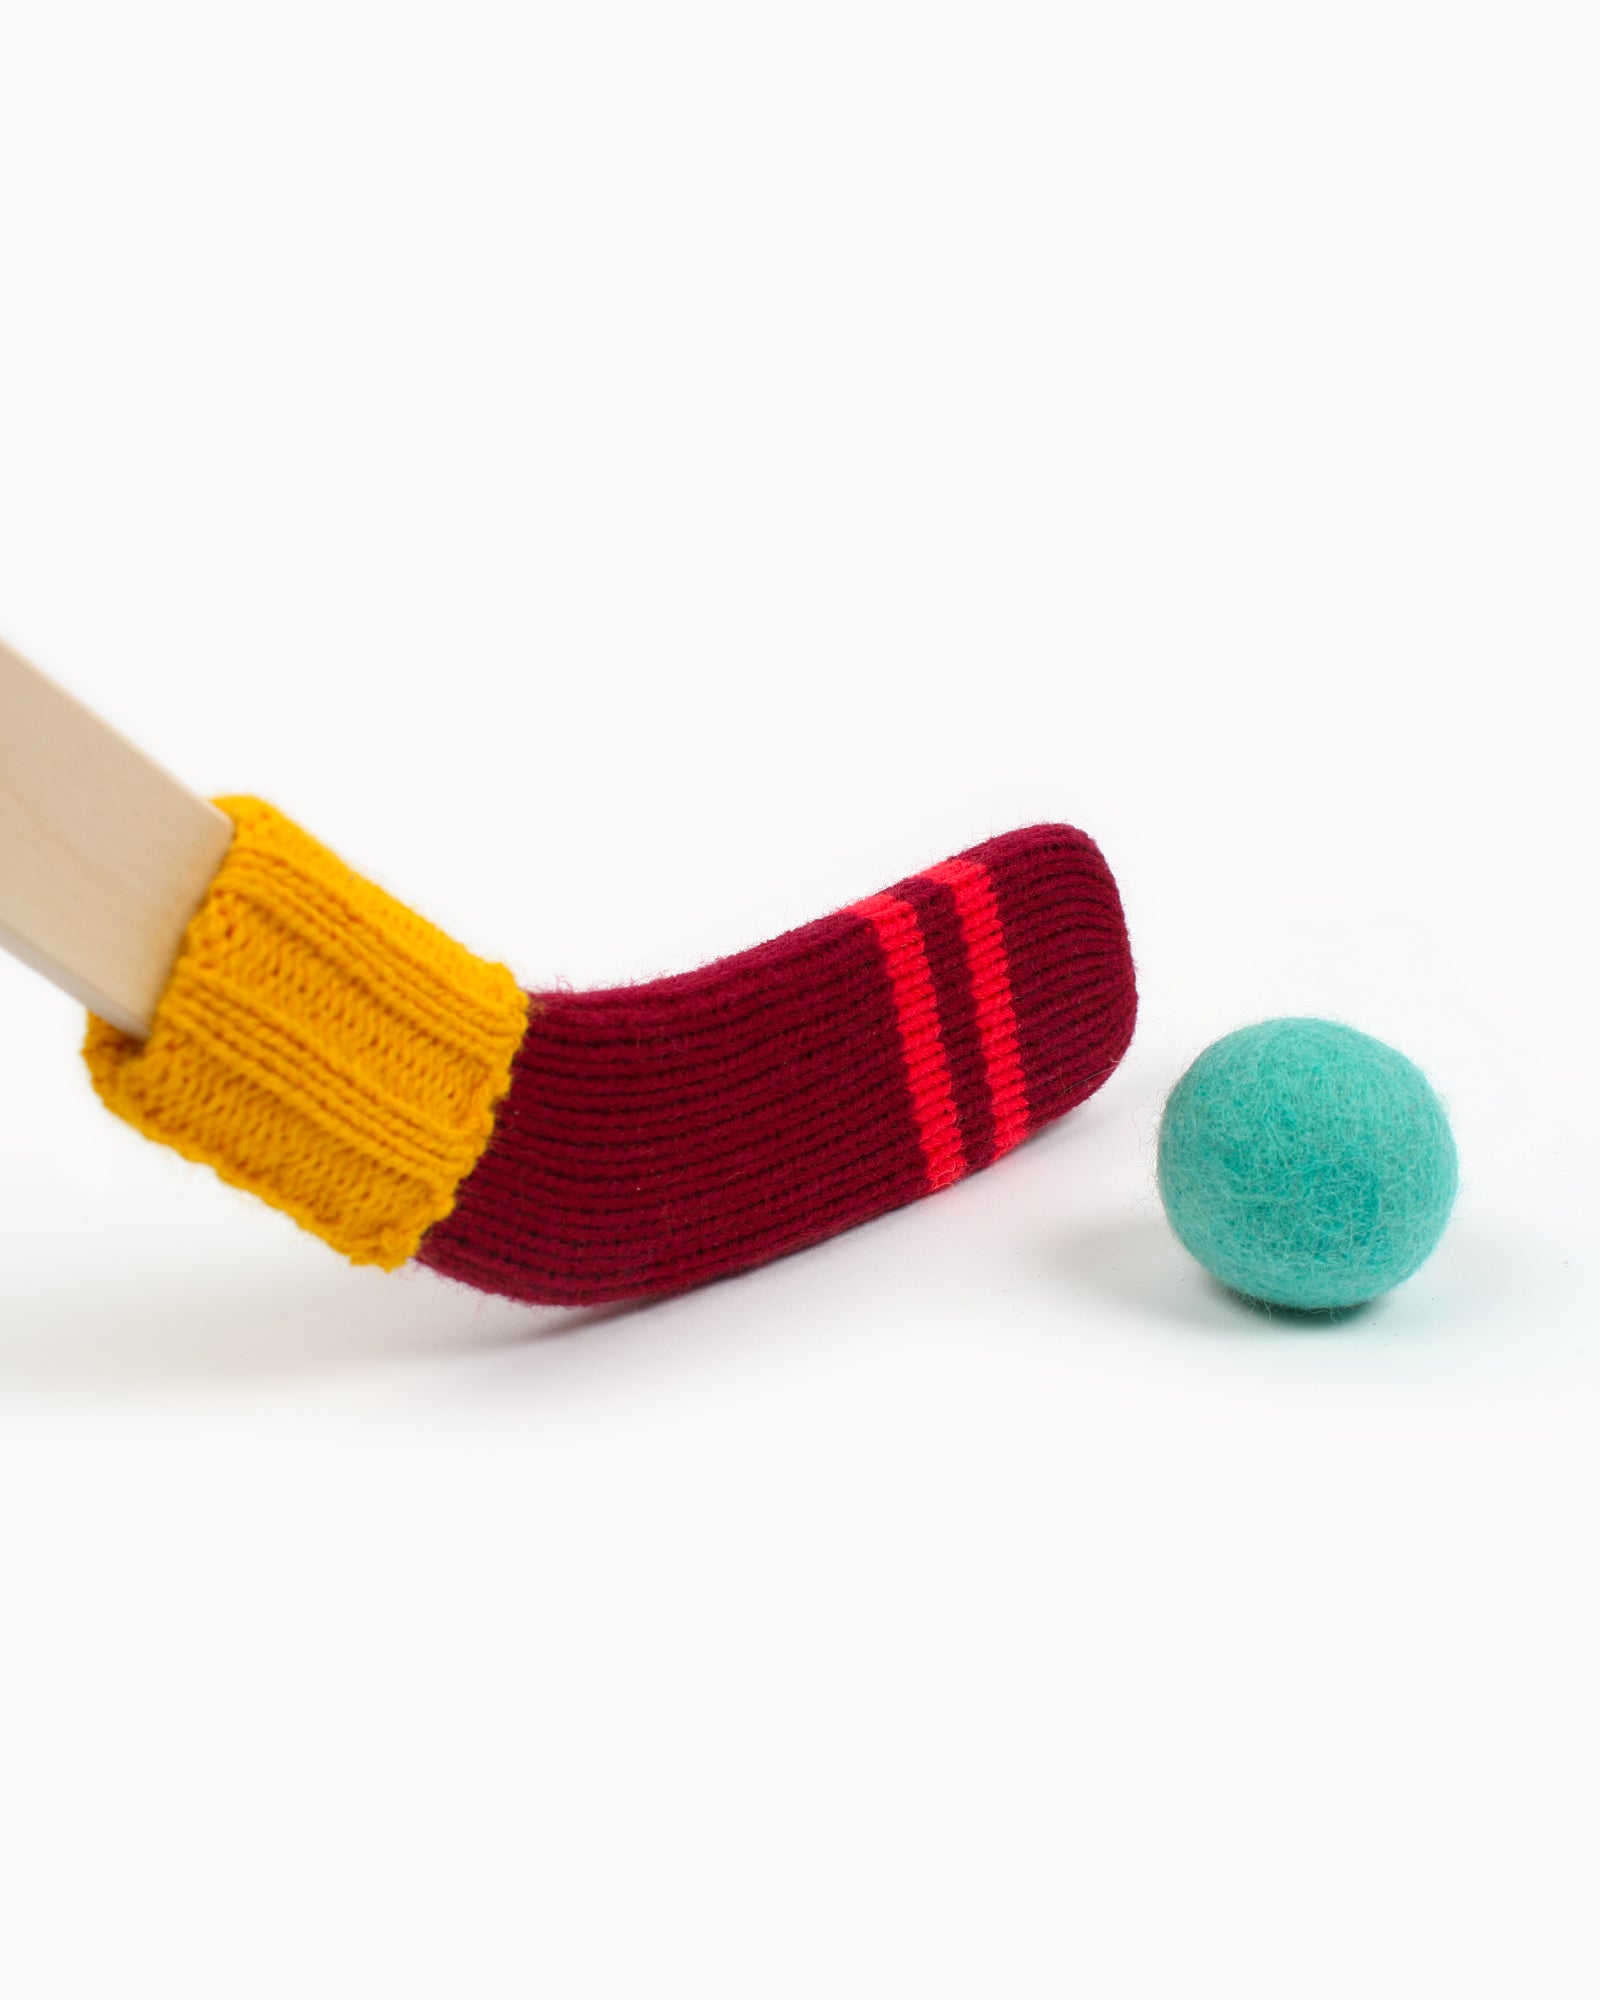 Bâton de hockey ― rouge et jaune